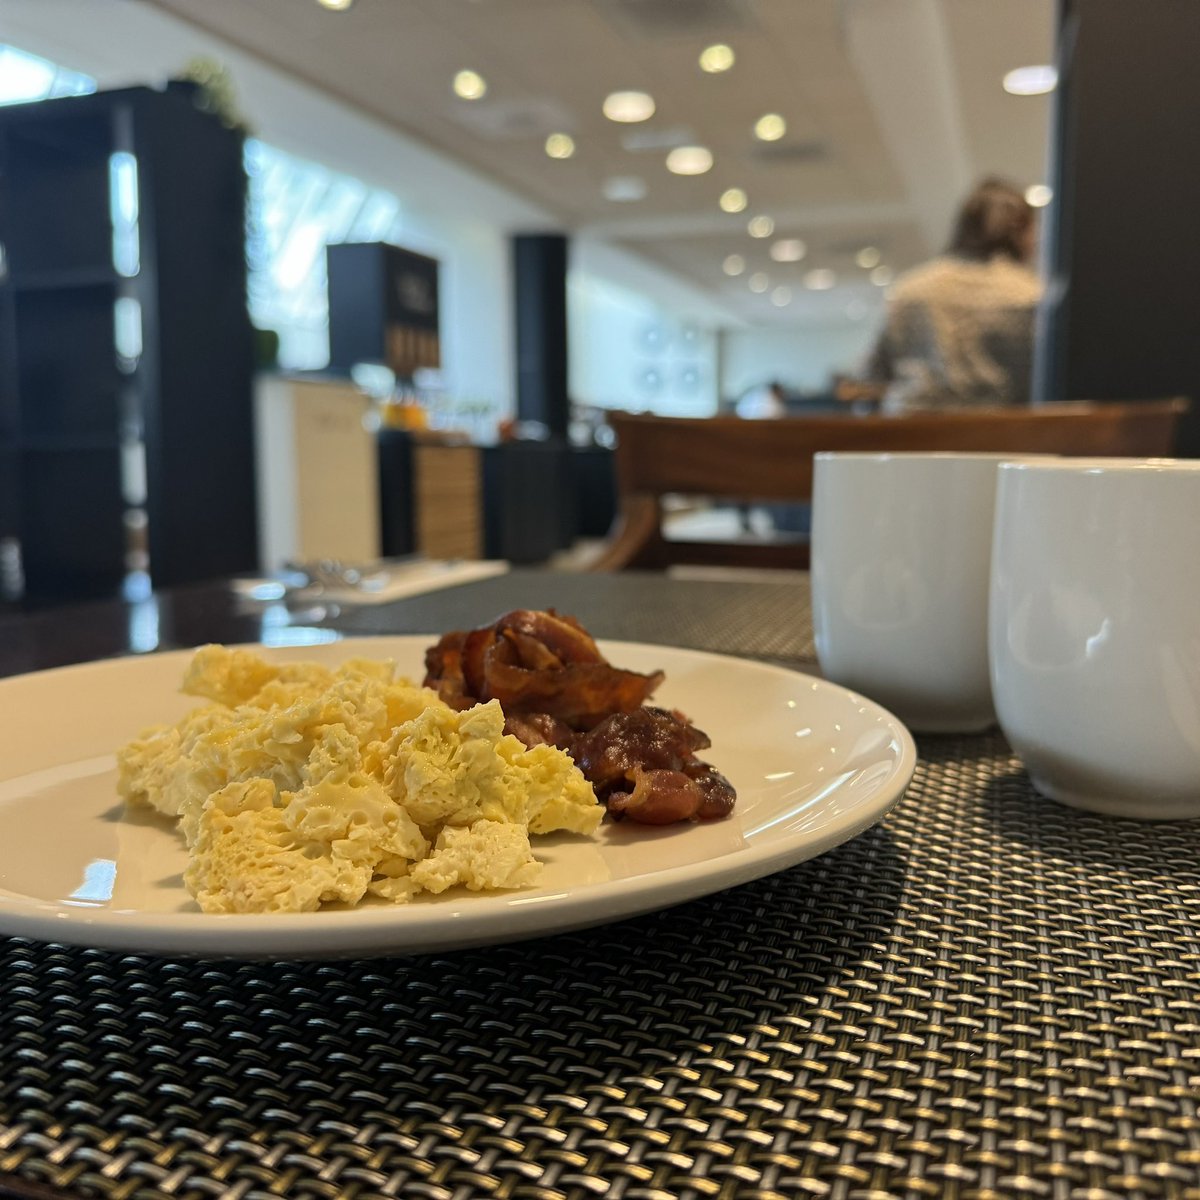 #hotelontbijtje...

#myview #hotel #NHhotels #NHAmsterdamNoord #Amsterdam
. 
#food #foodporn #foodgasm #foodphotography #breakfast #breakfasttime #coffee #eggs #scrambledeggs #bacon